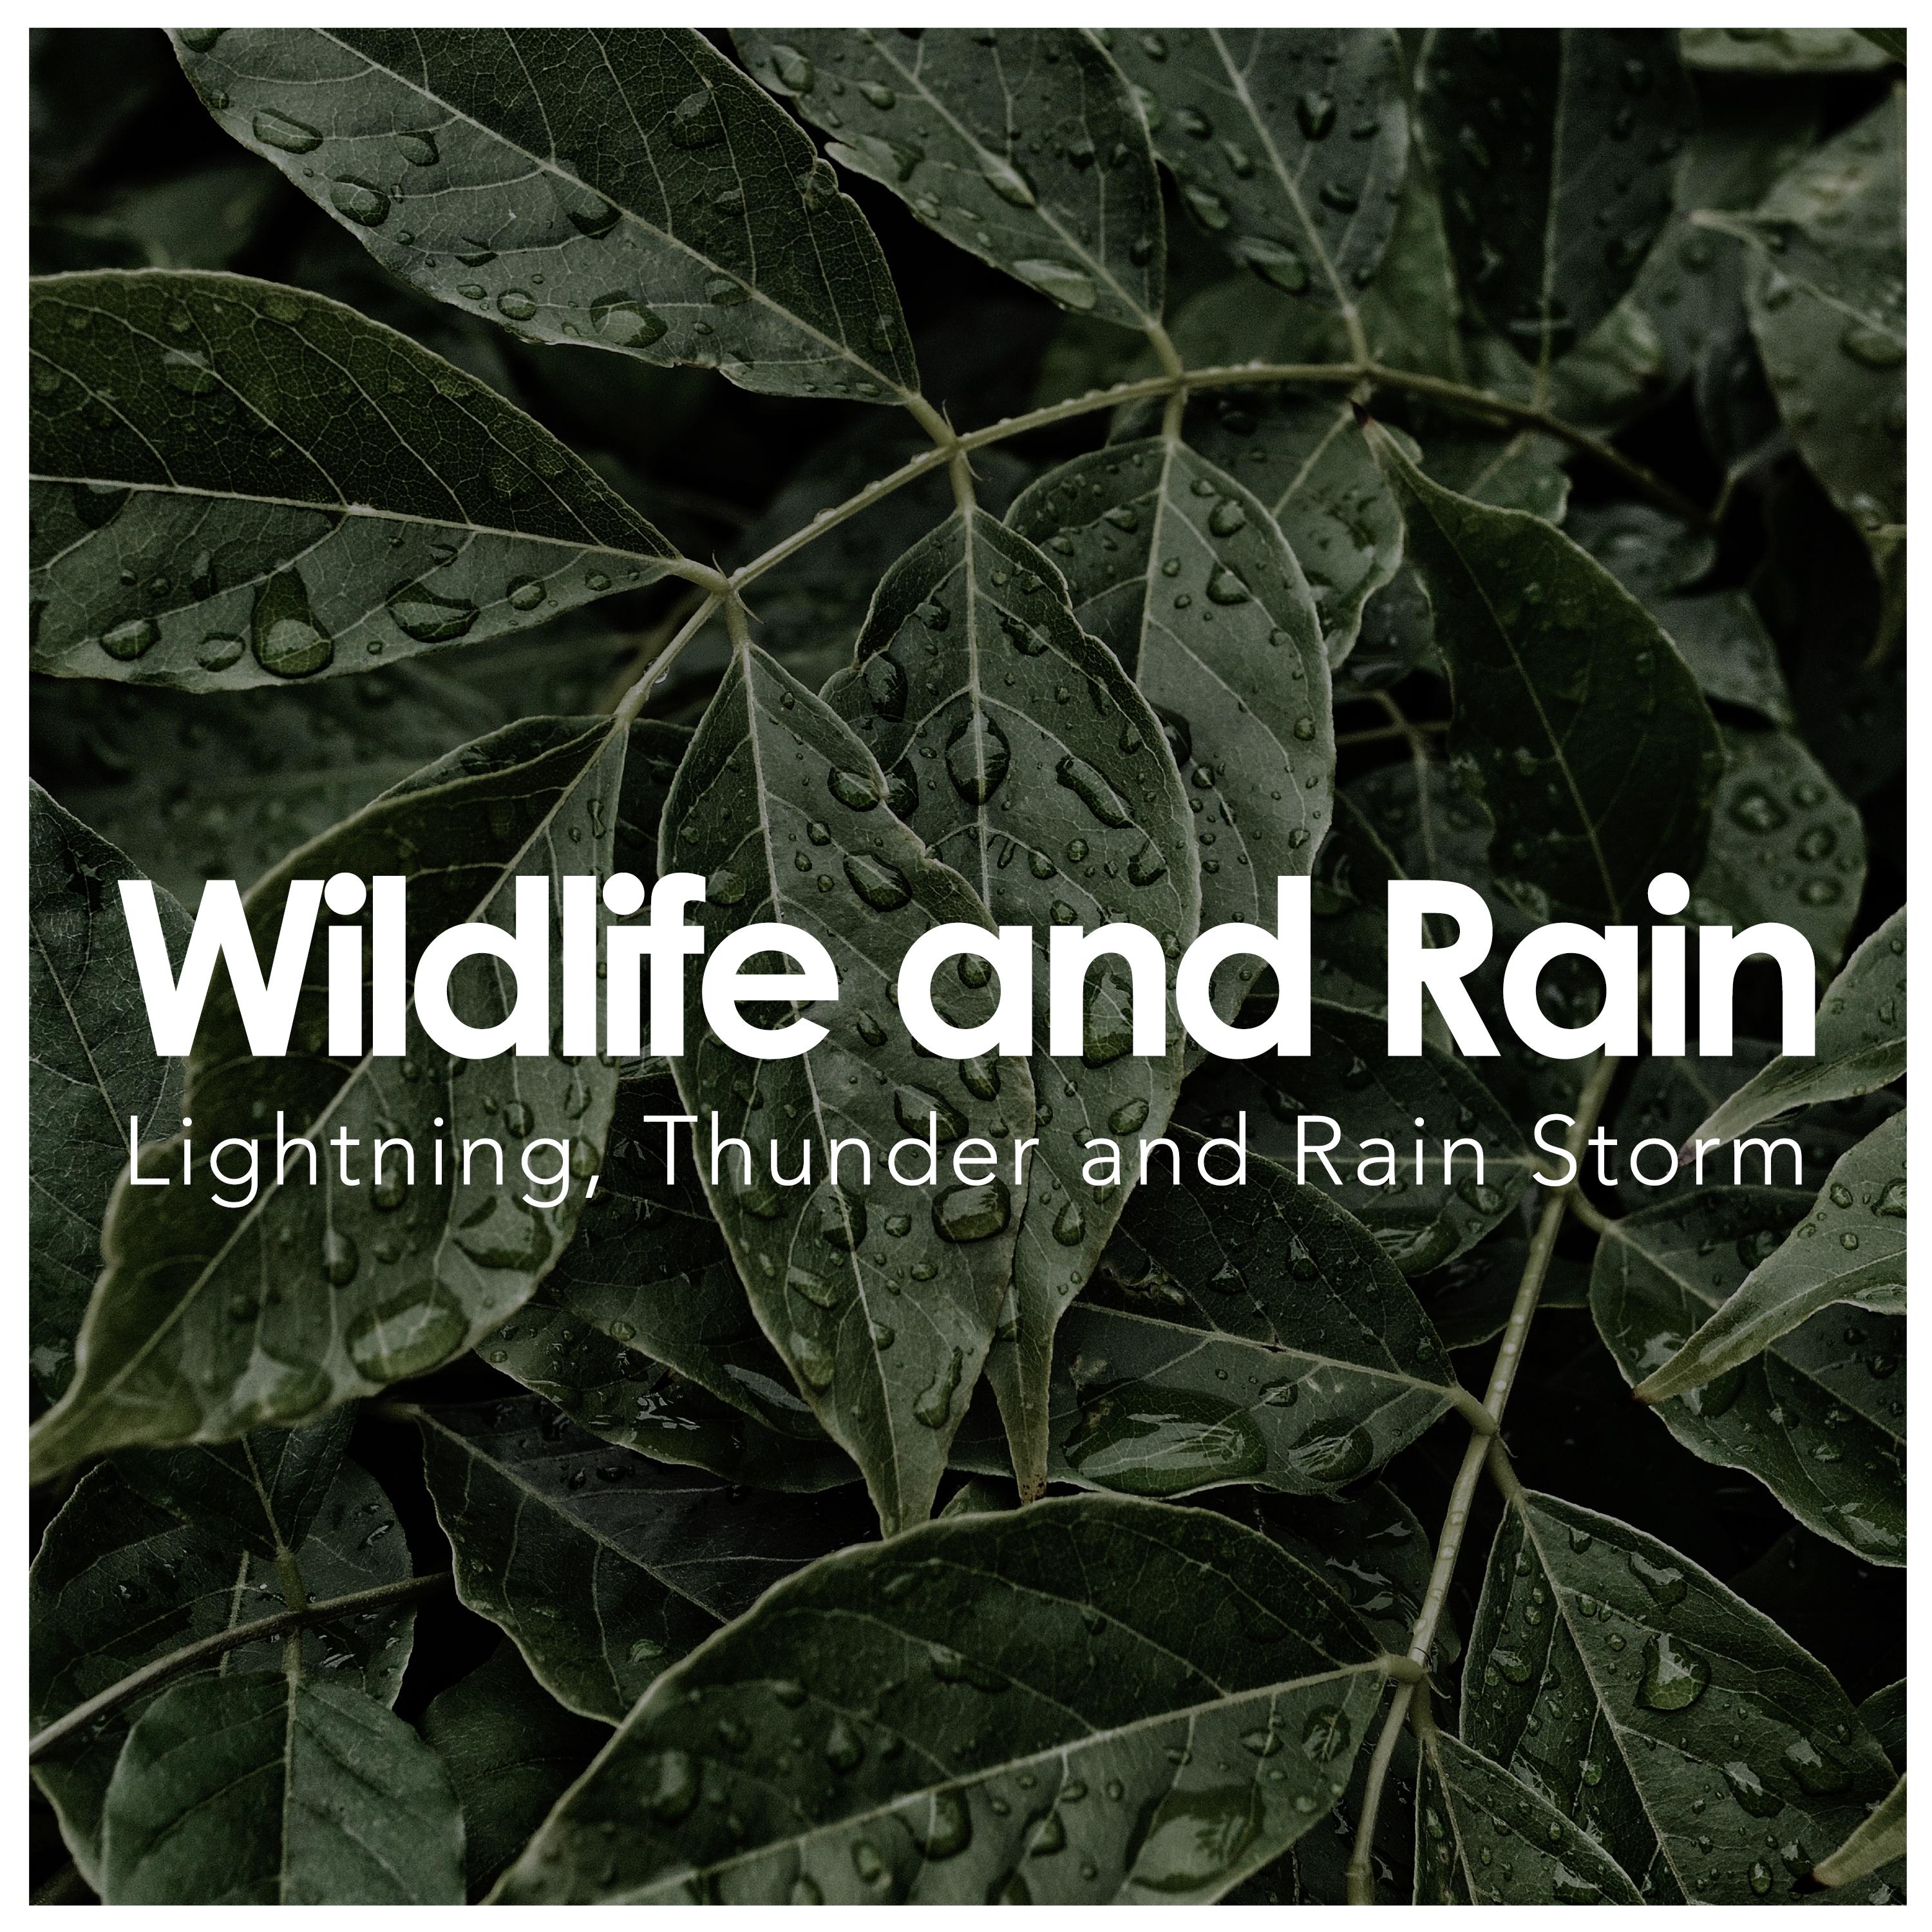 Wildlife and Rain